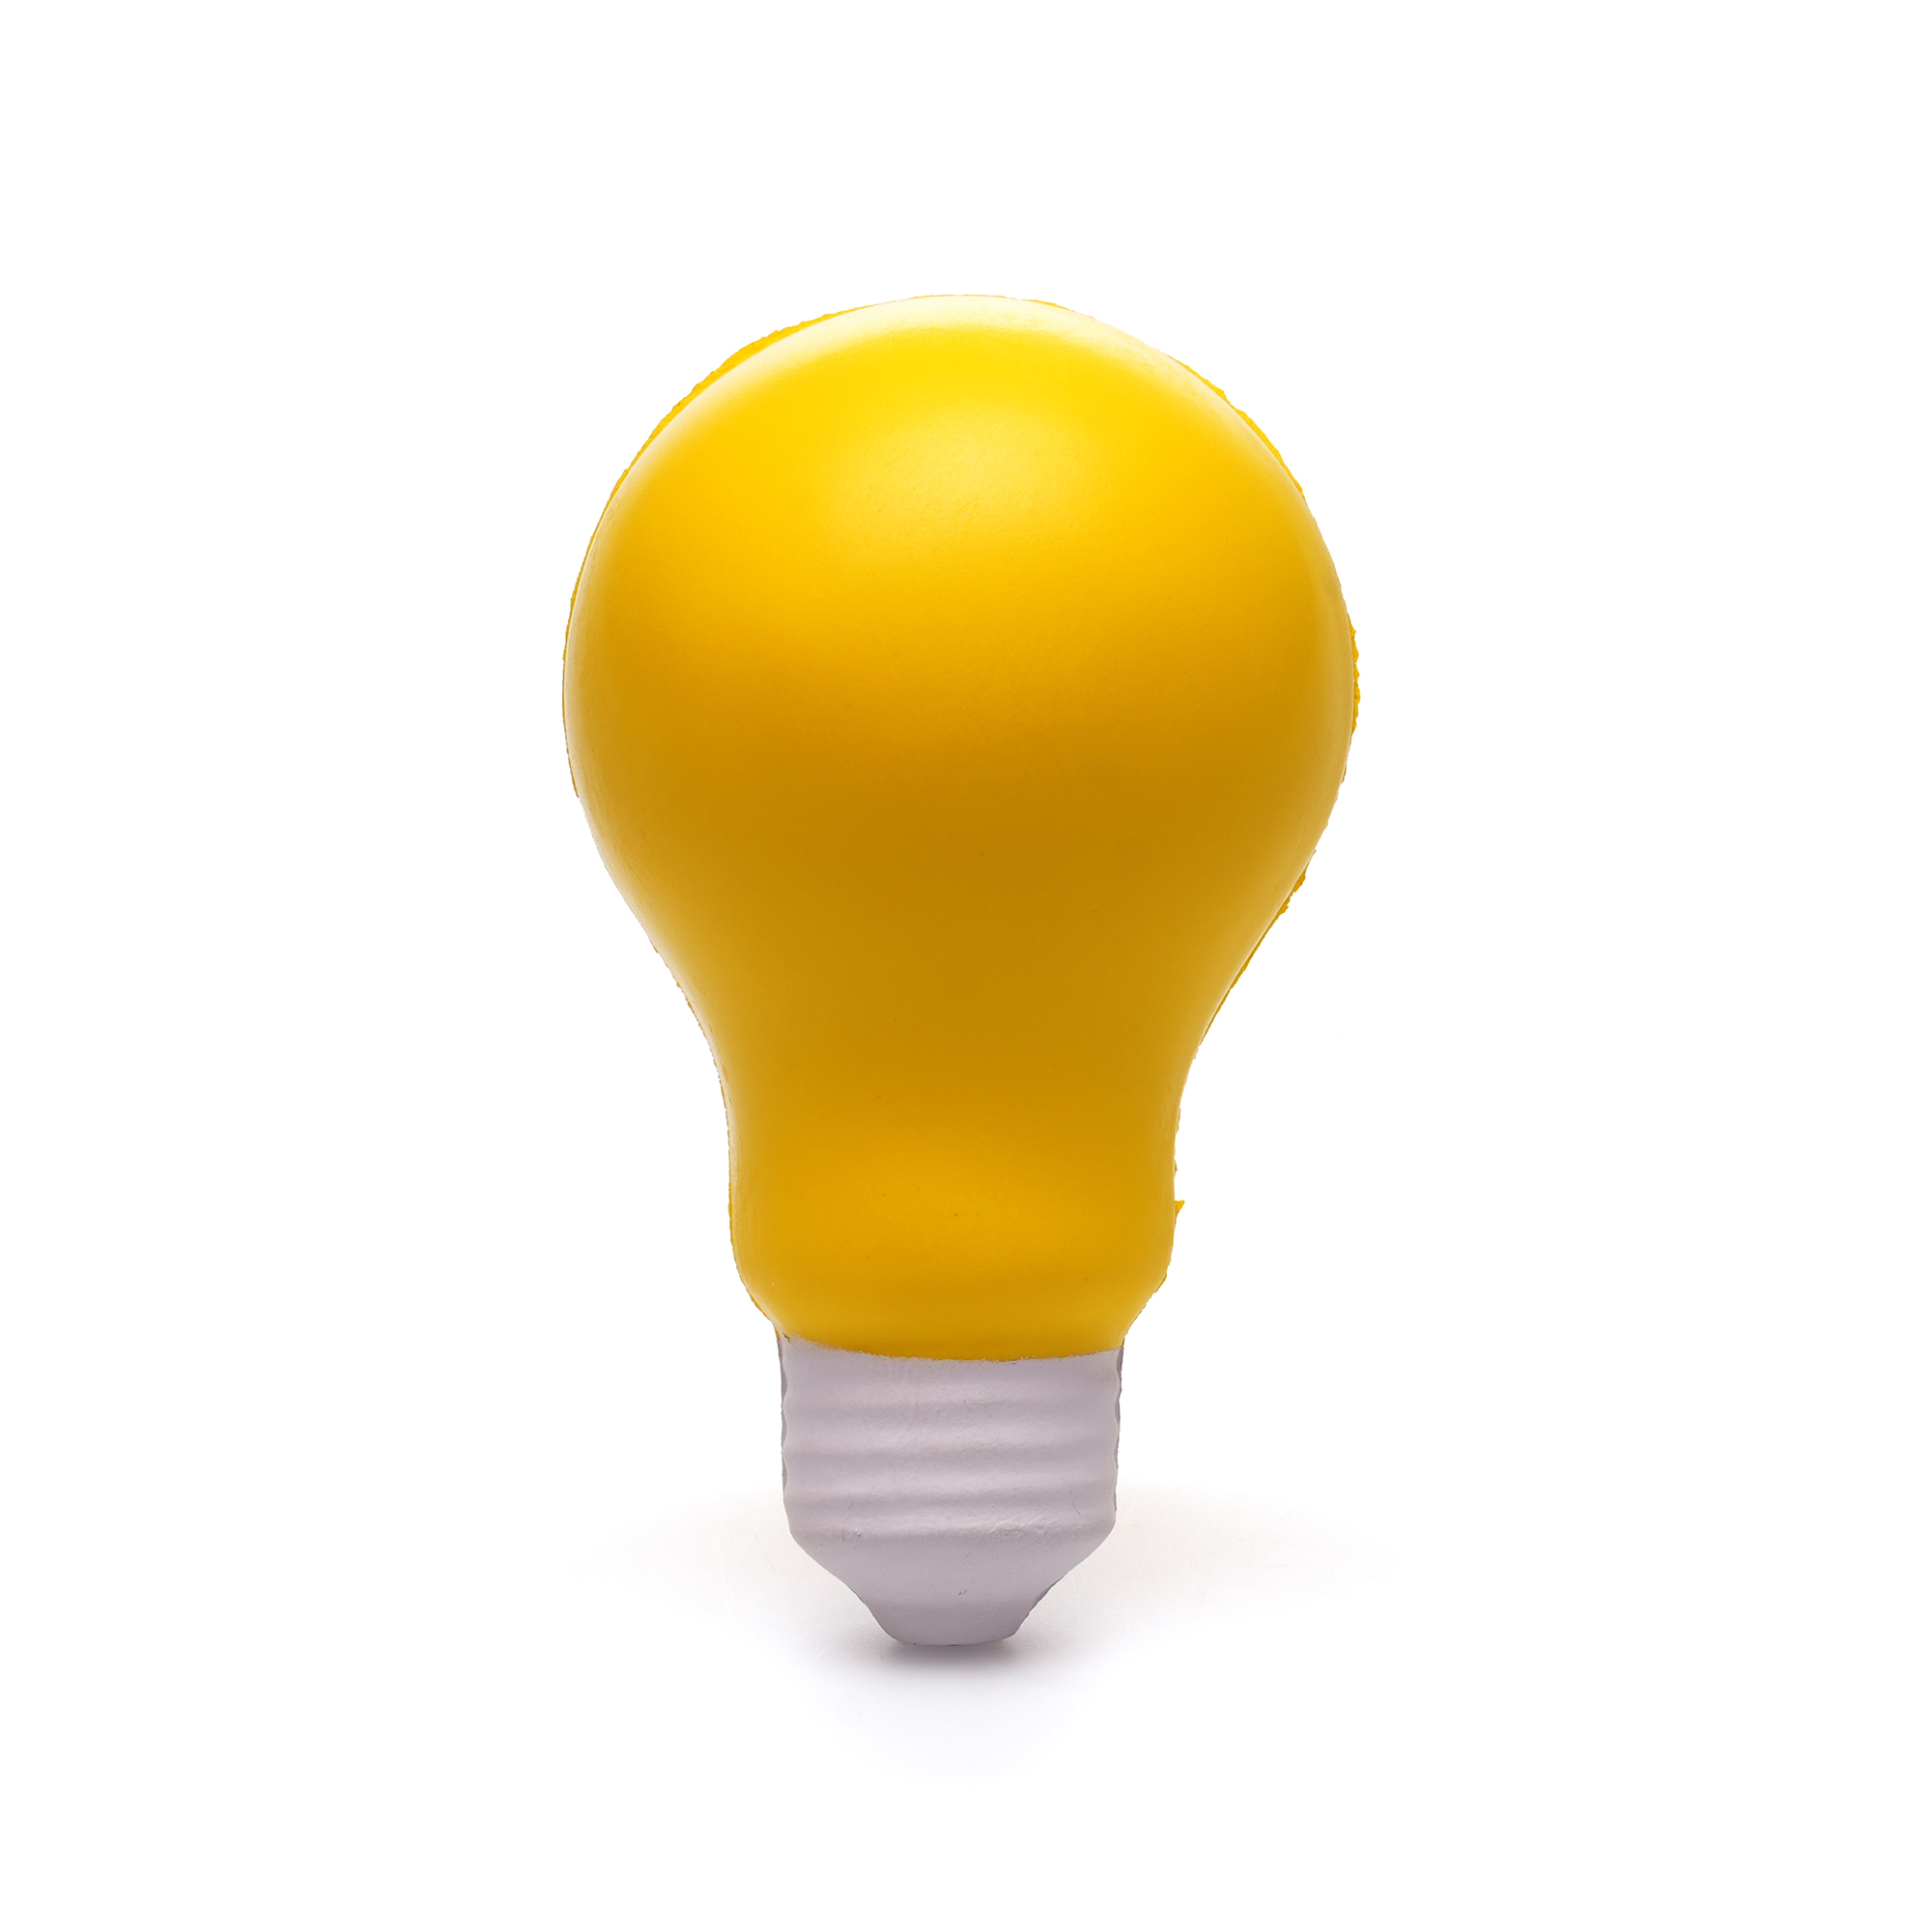 SS0527 - Light Bulb PU Stress Toy